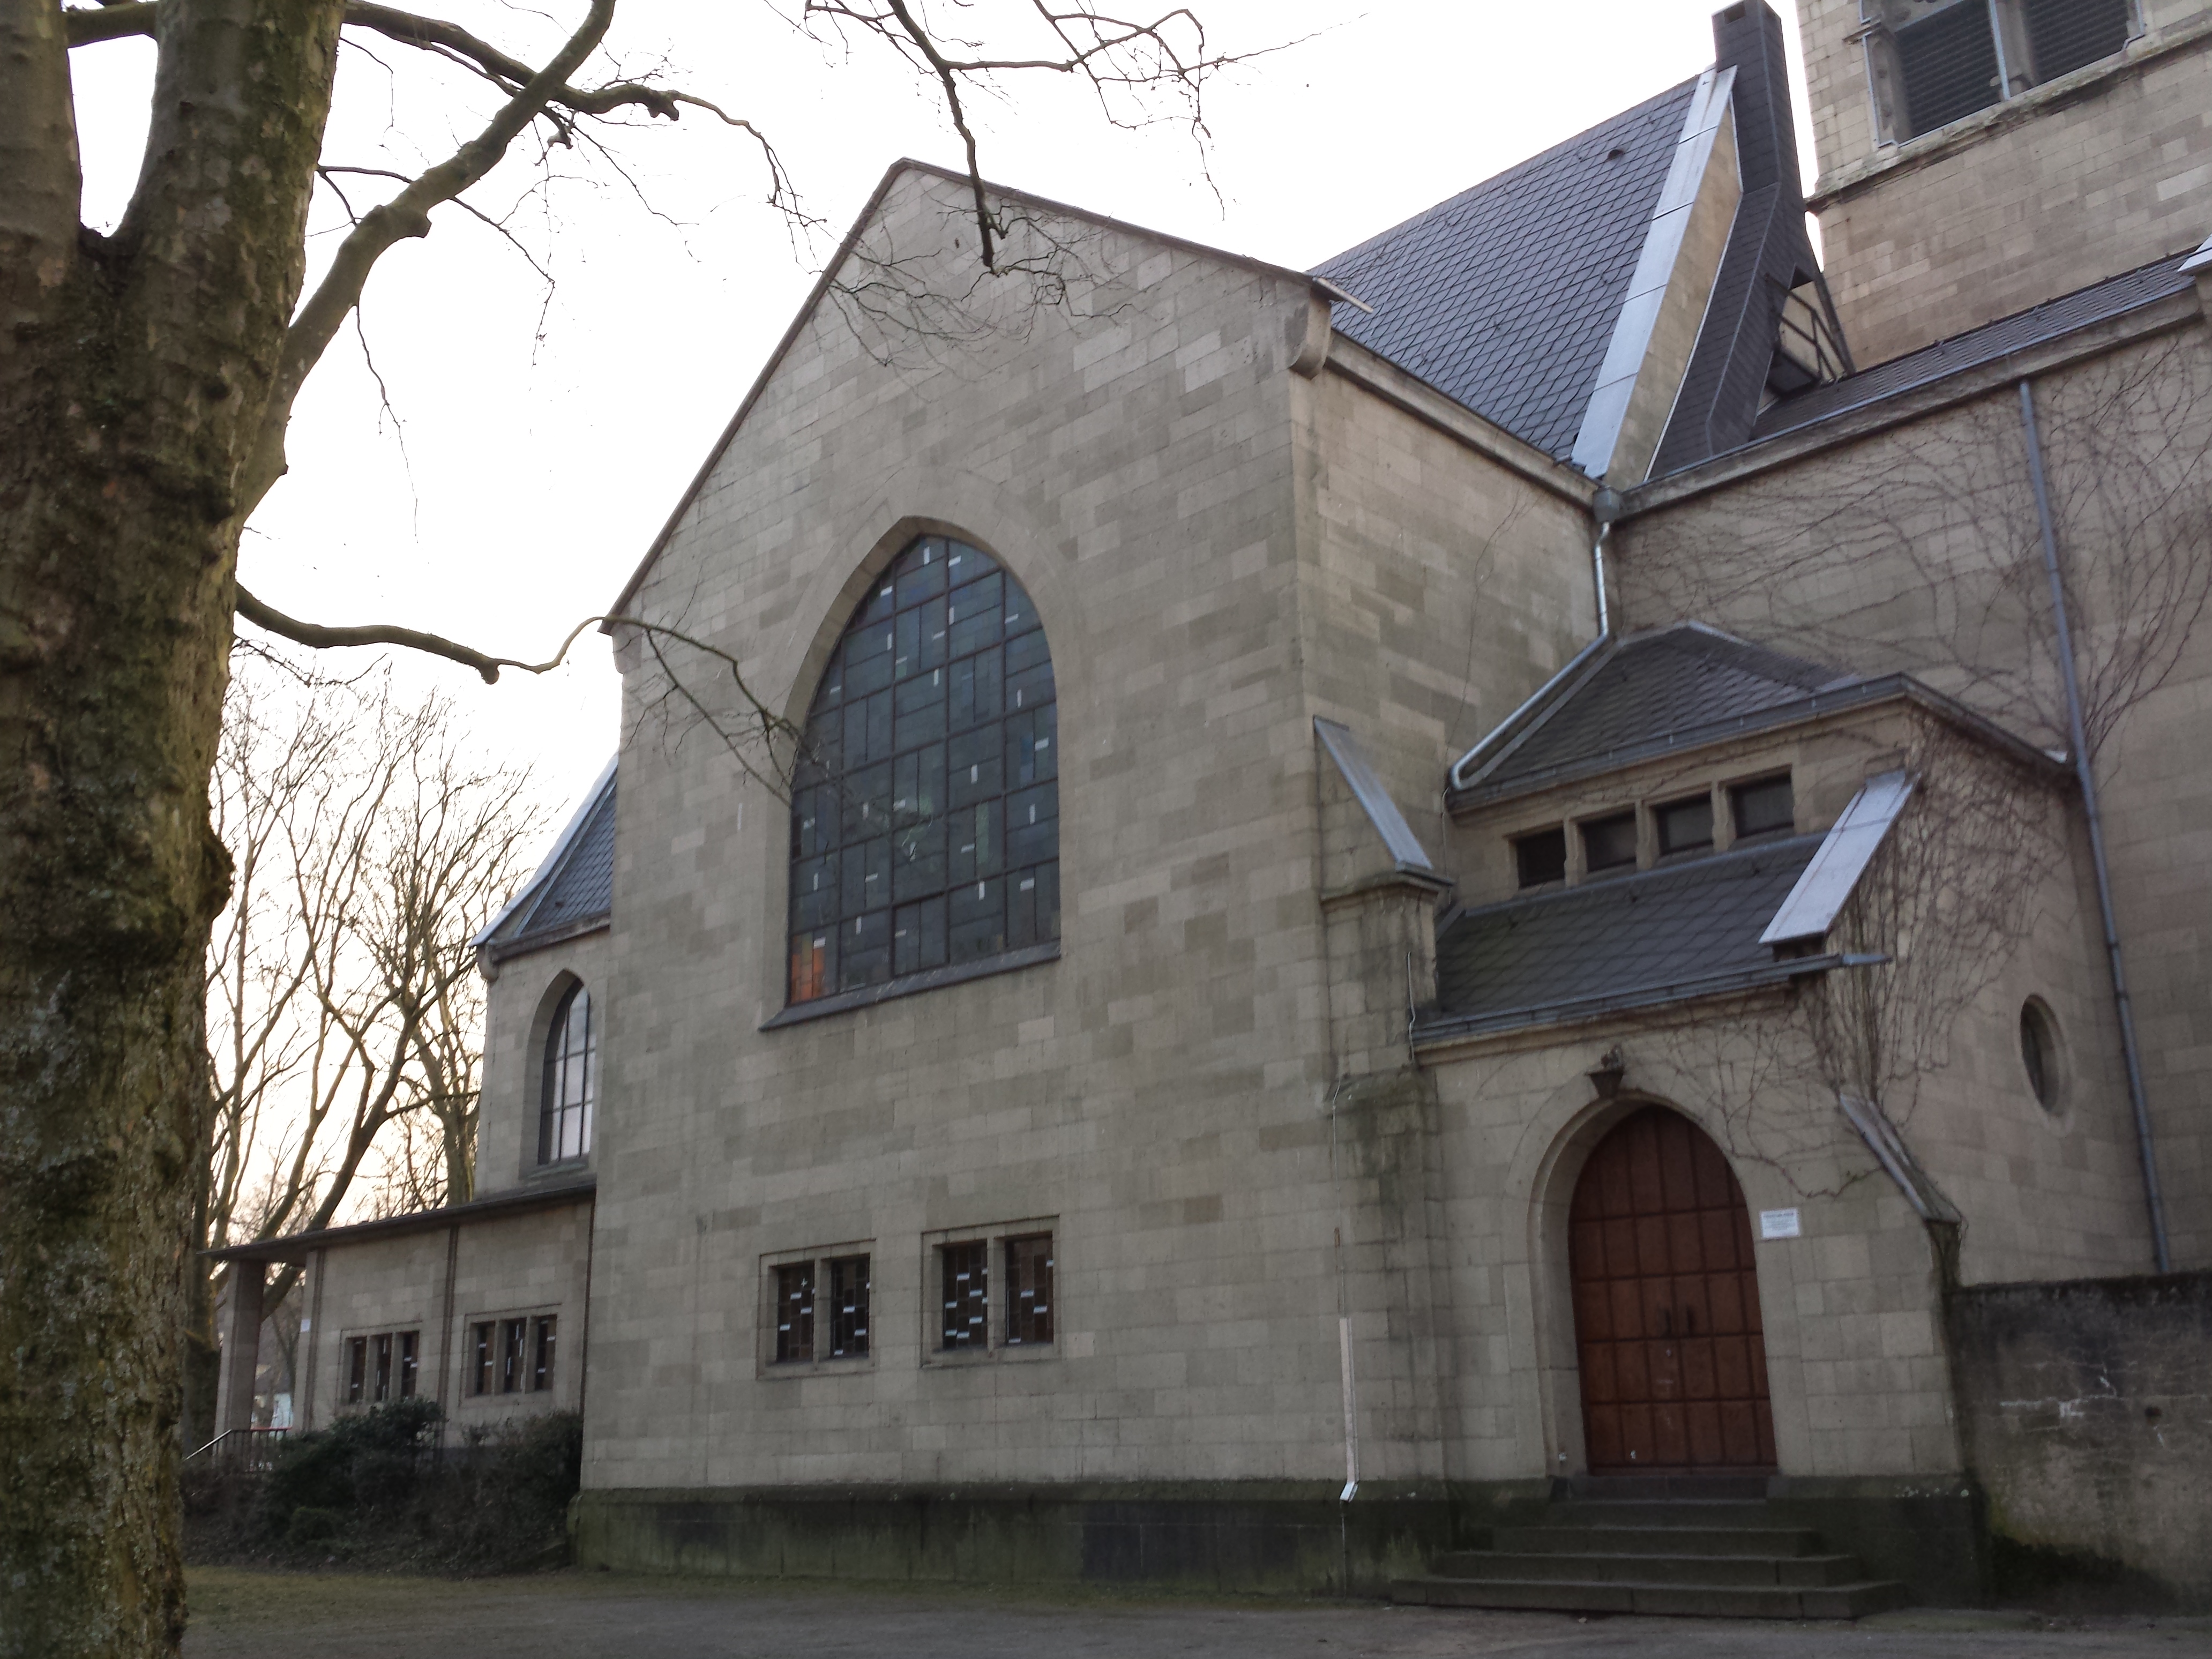 Bild 2 Gnadenkirche Wanheimerort - Evangelische Gemeinde Duisburg-Wanheimerort in Duisburg